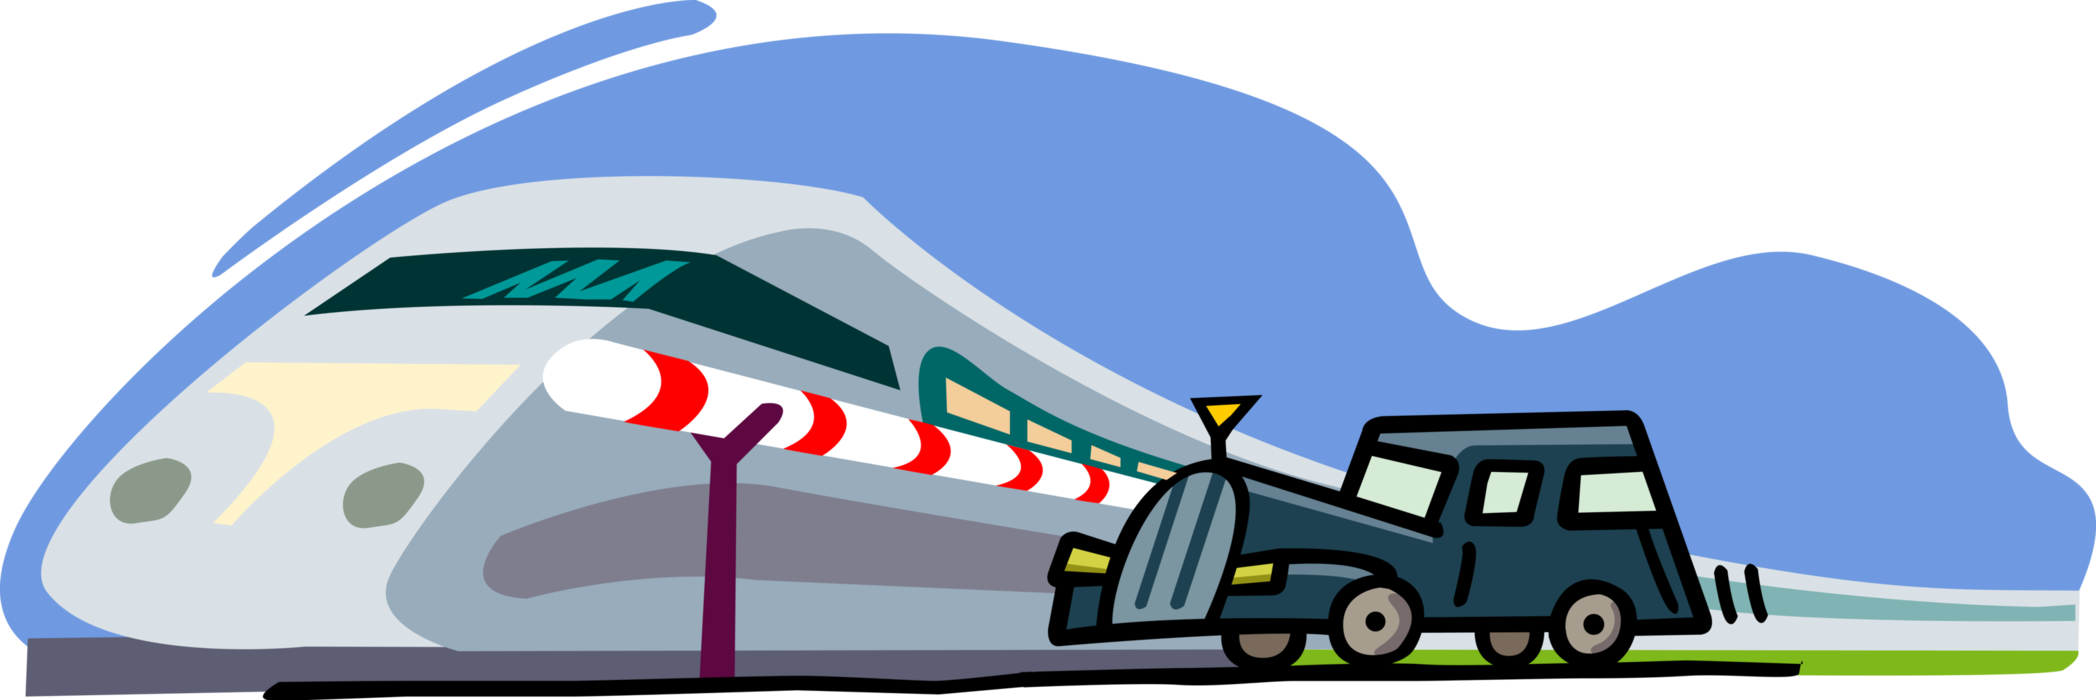 Vector Illustration of Car Stops at Level Crossing with Railroad Rail Transport Speeding Locomotive Railway Train